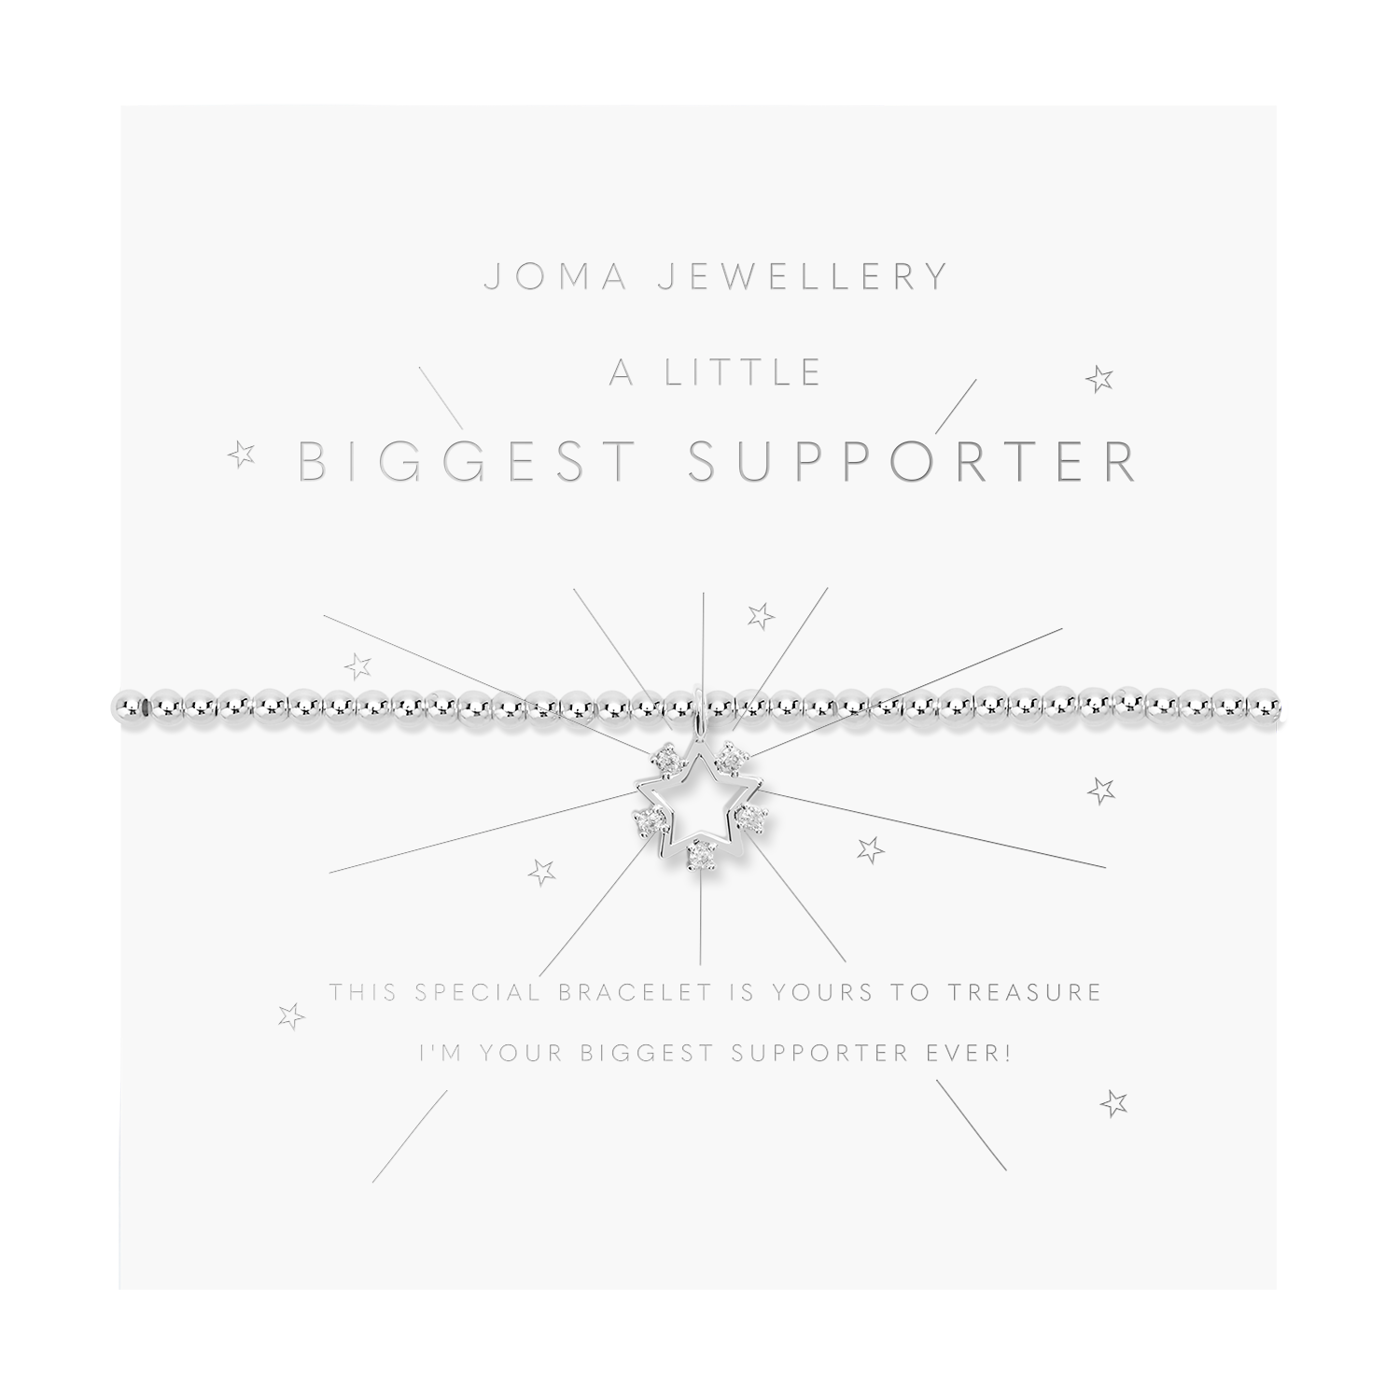 A Little 'Biggest Supporter' Bracelet - Joma Jewellery